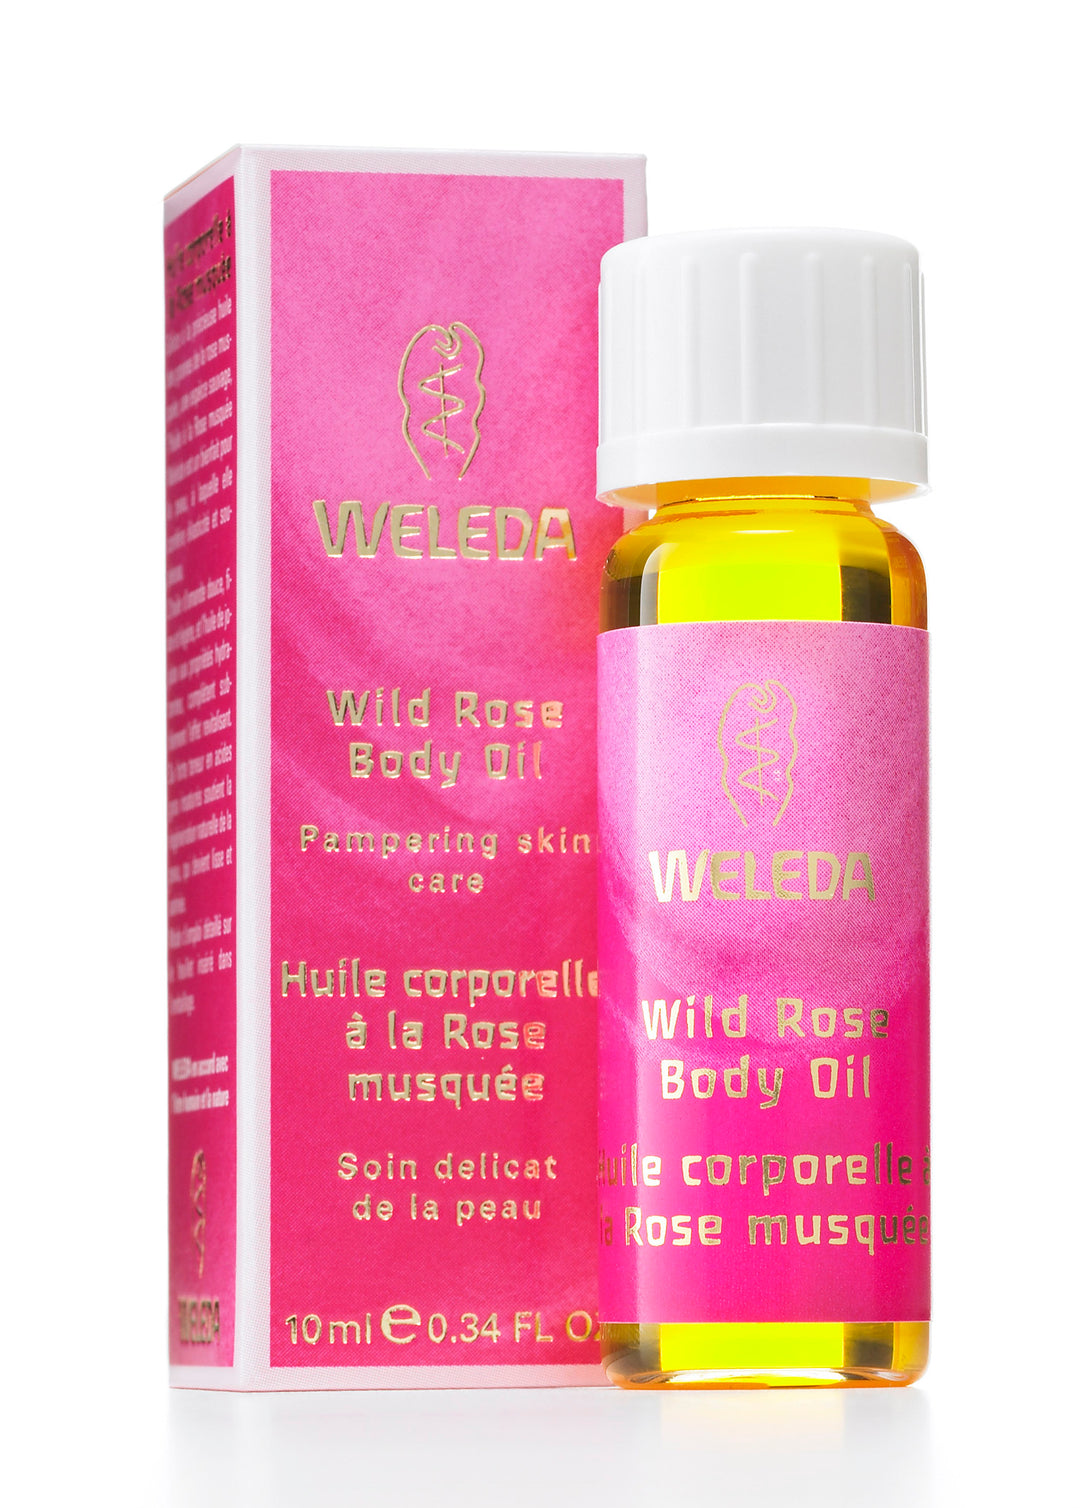 Weleda Travel Size - Wild Rose Body Oil